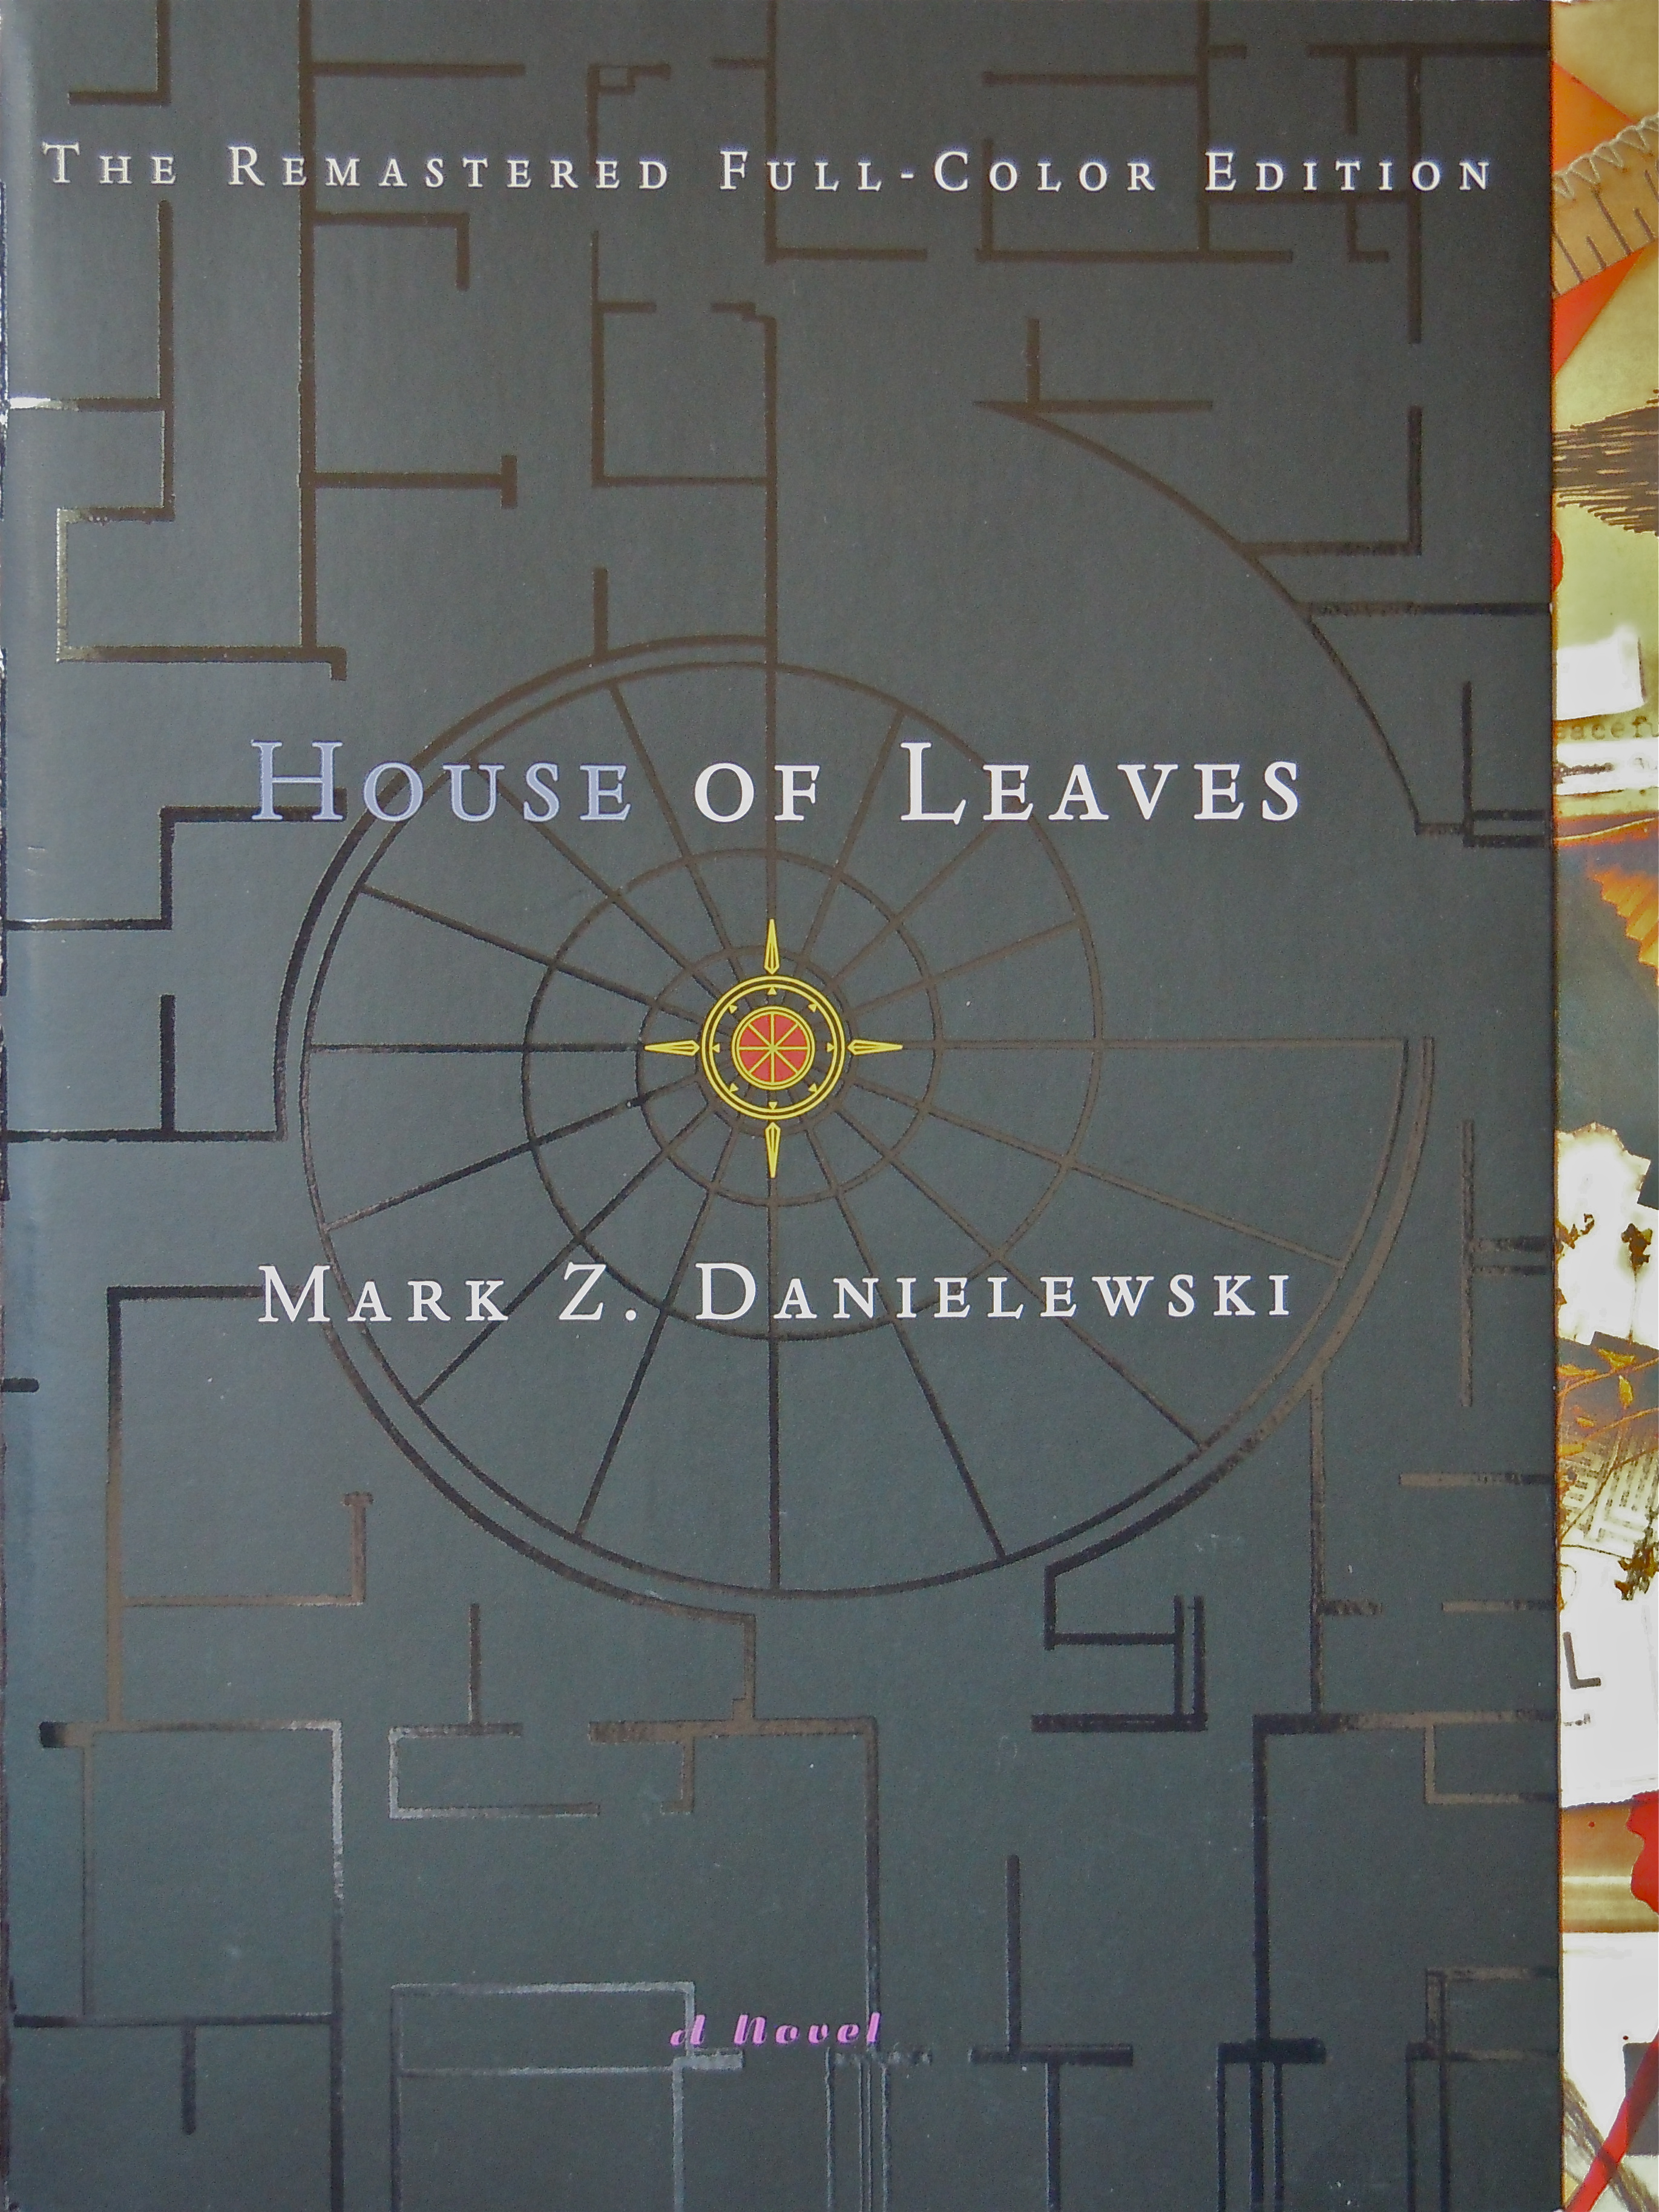 mark z danielewski new book